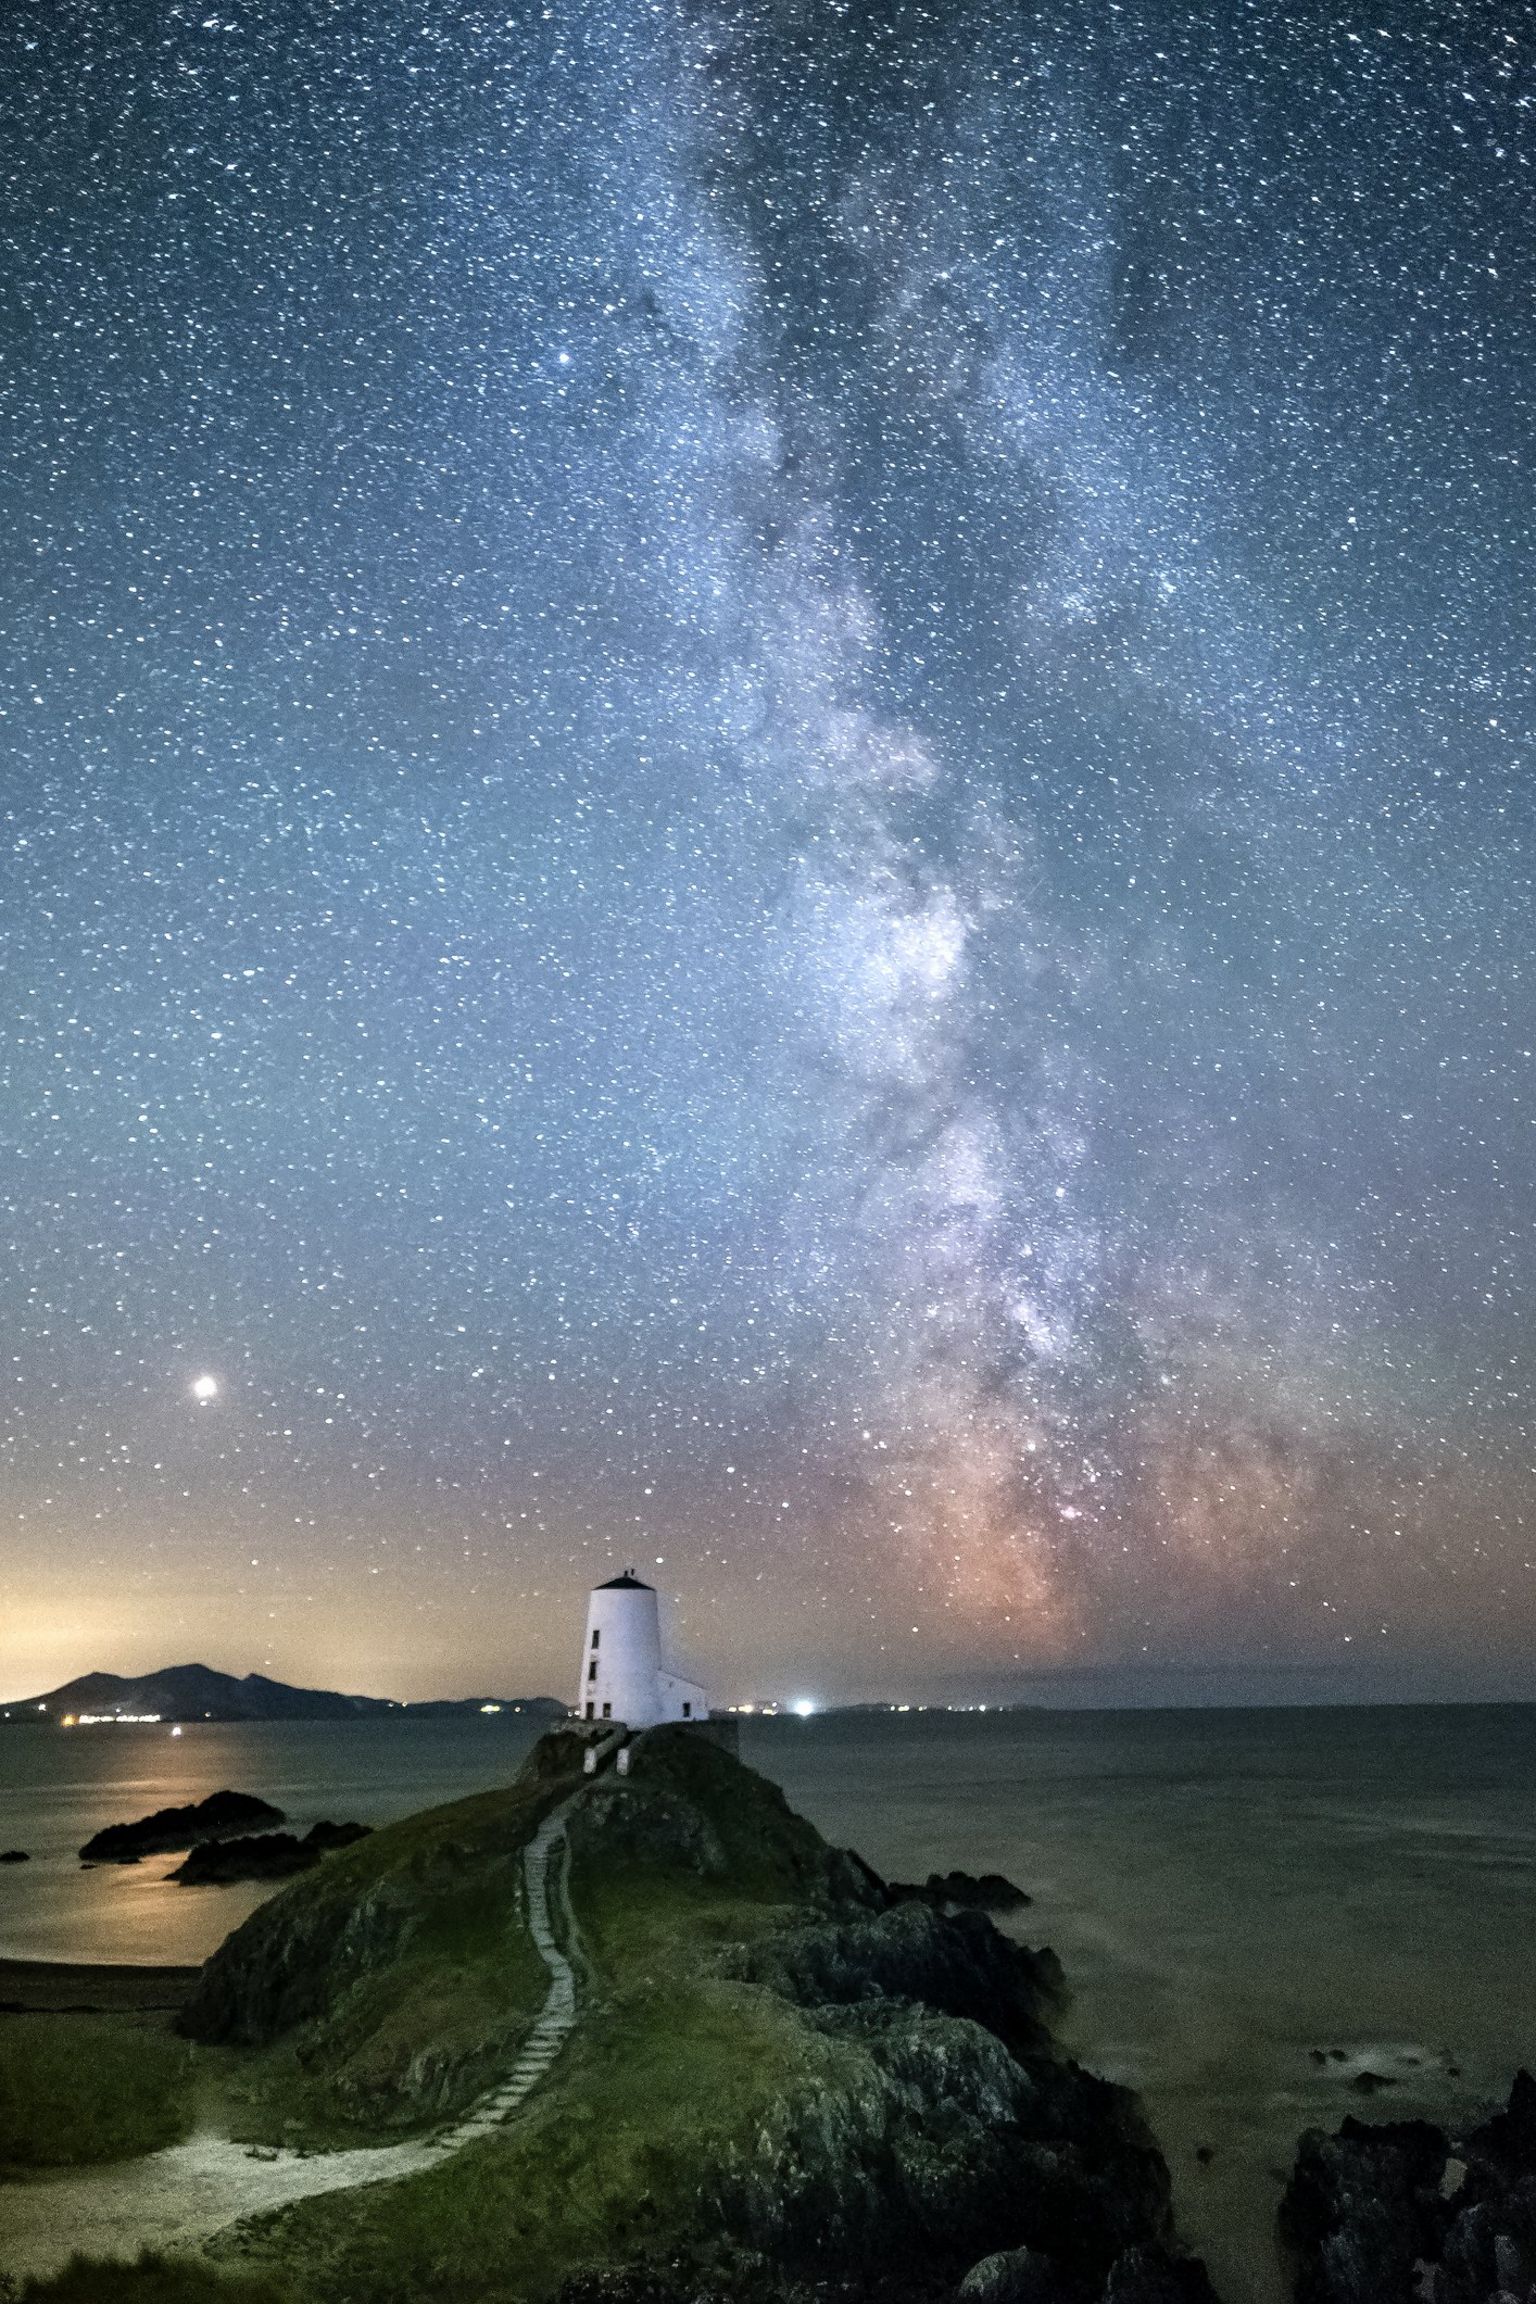 The Milkyway and night sky over Twr Mawr Lighthouse, Llanddwyn Island, Anglesey